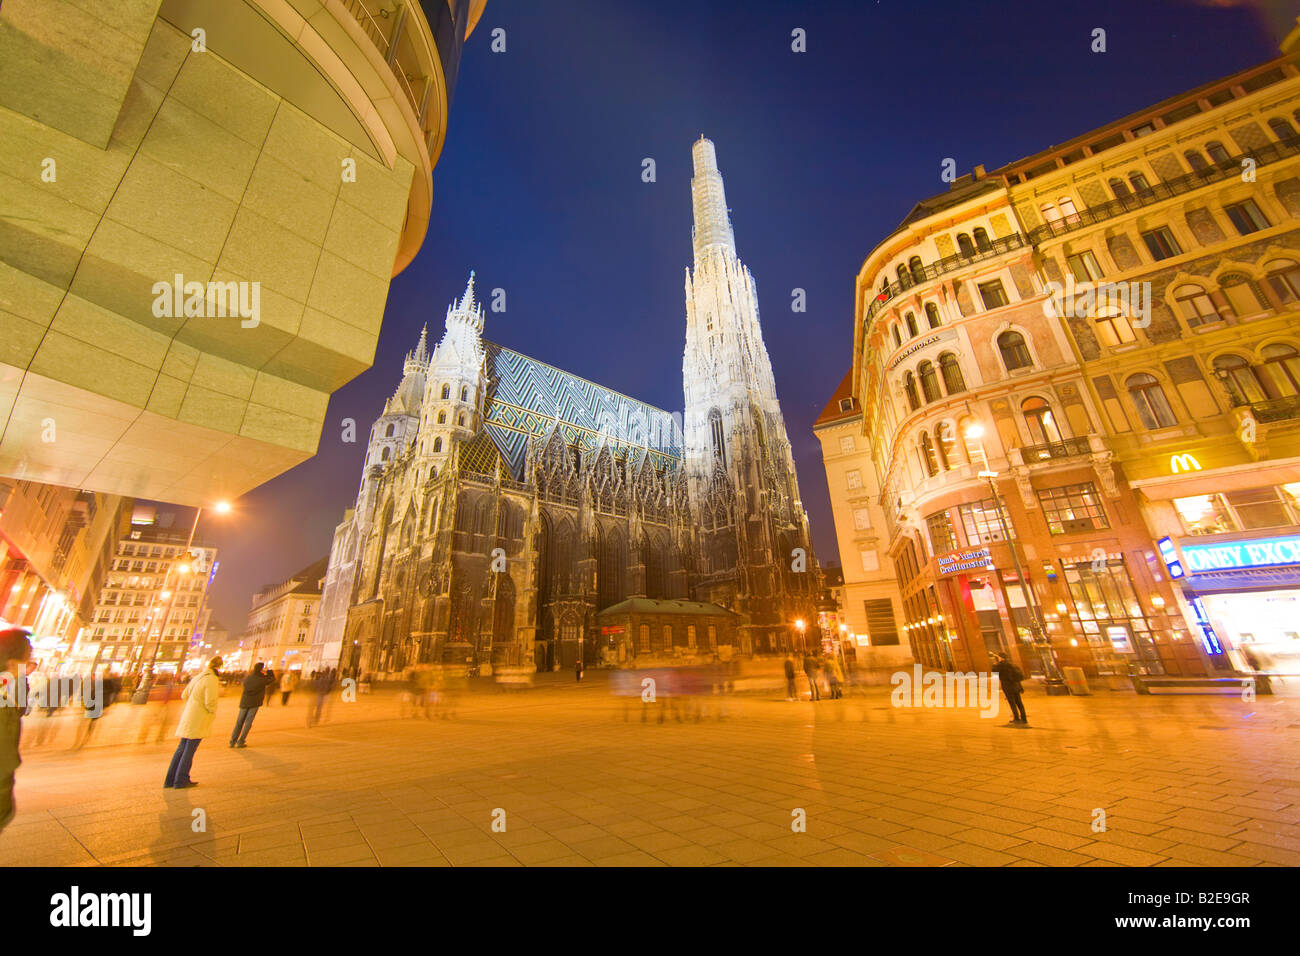 Cattedrale illuminata di notte, la Cattedrale di St Stephen, Stephansplatz, Vienna, Austria Foto Stock